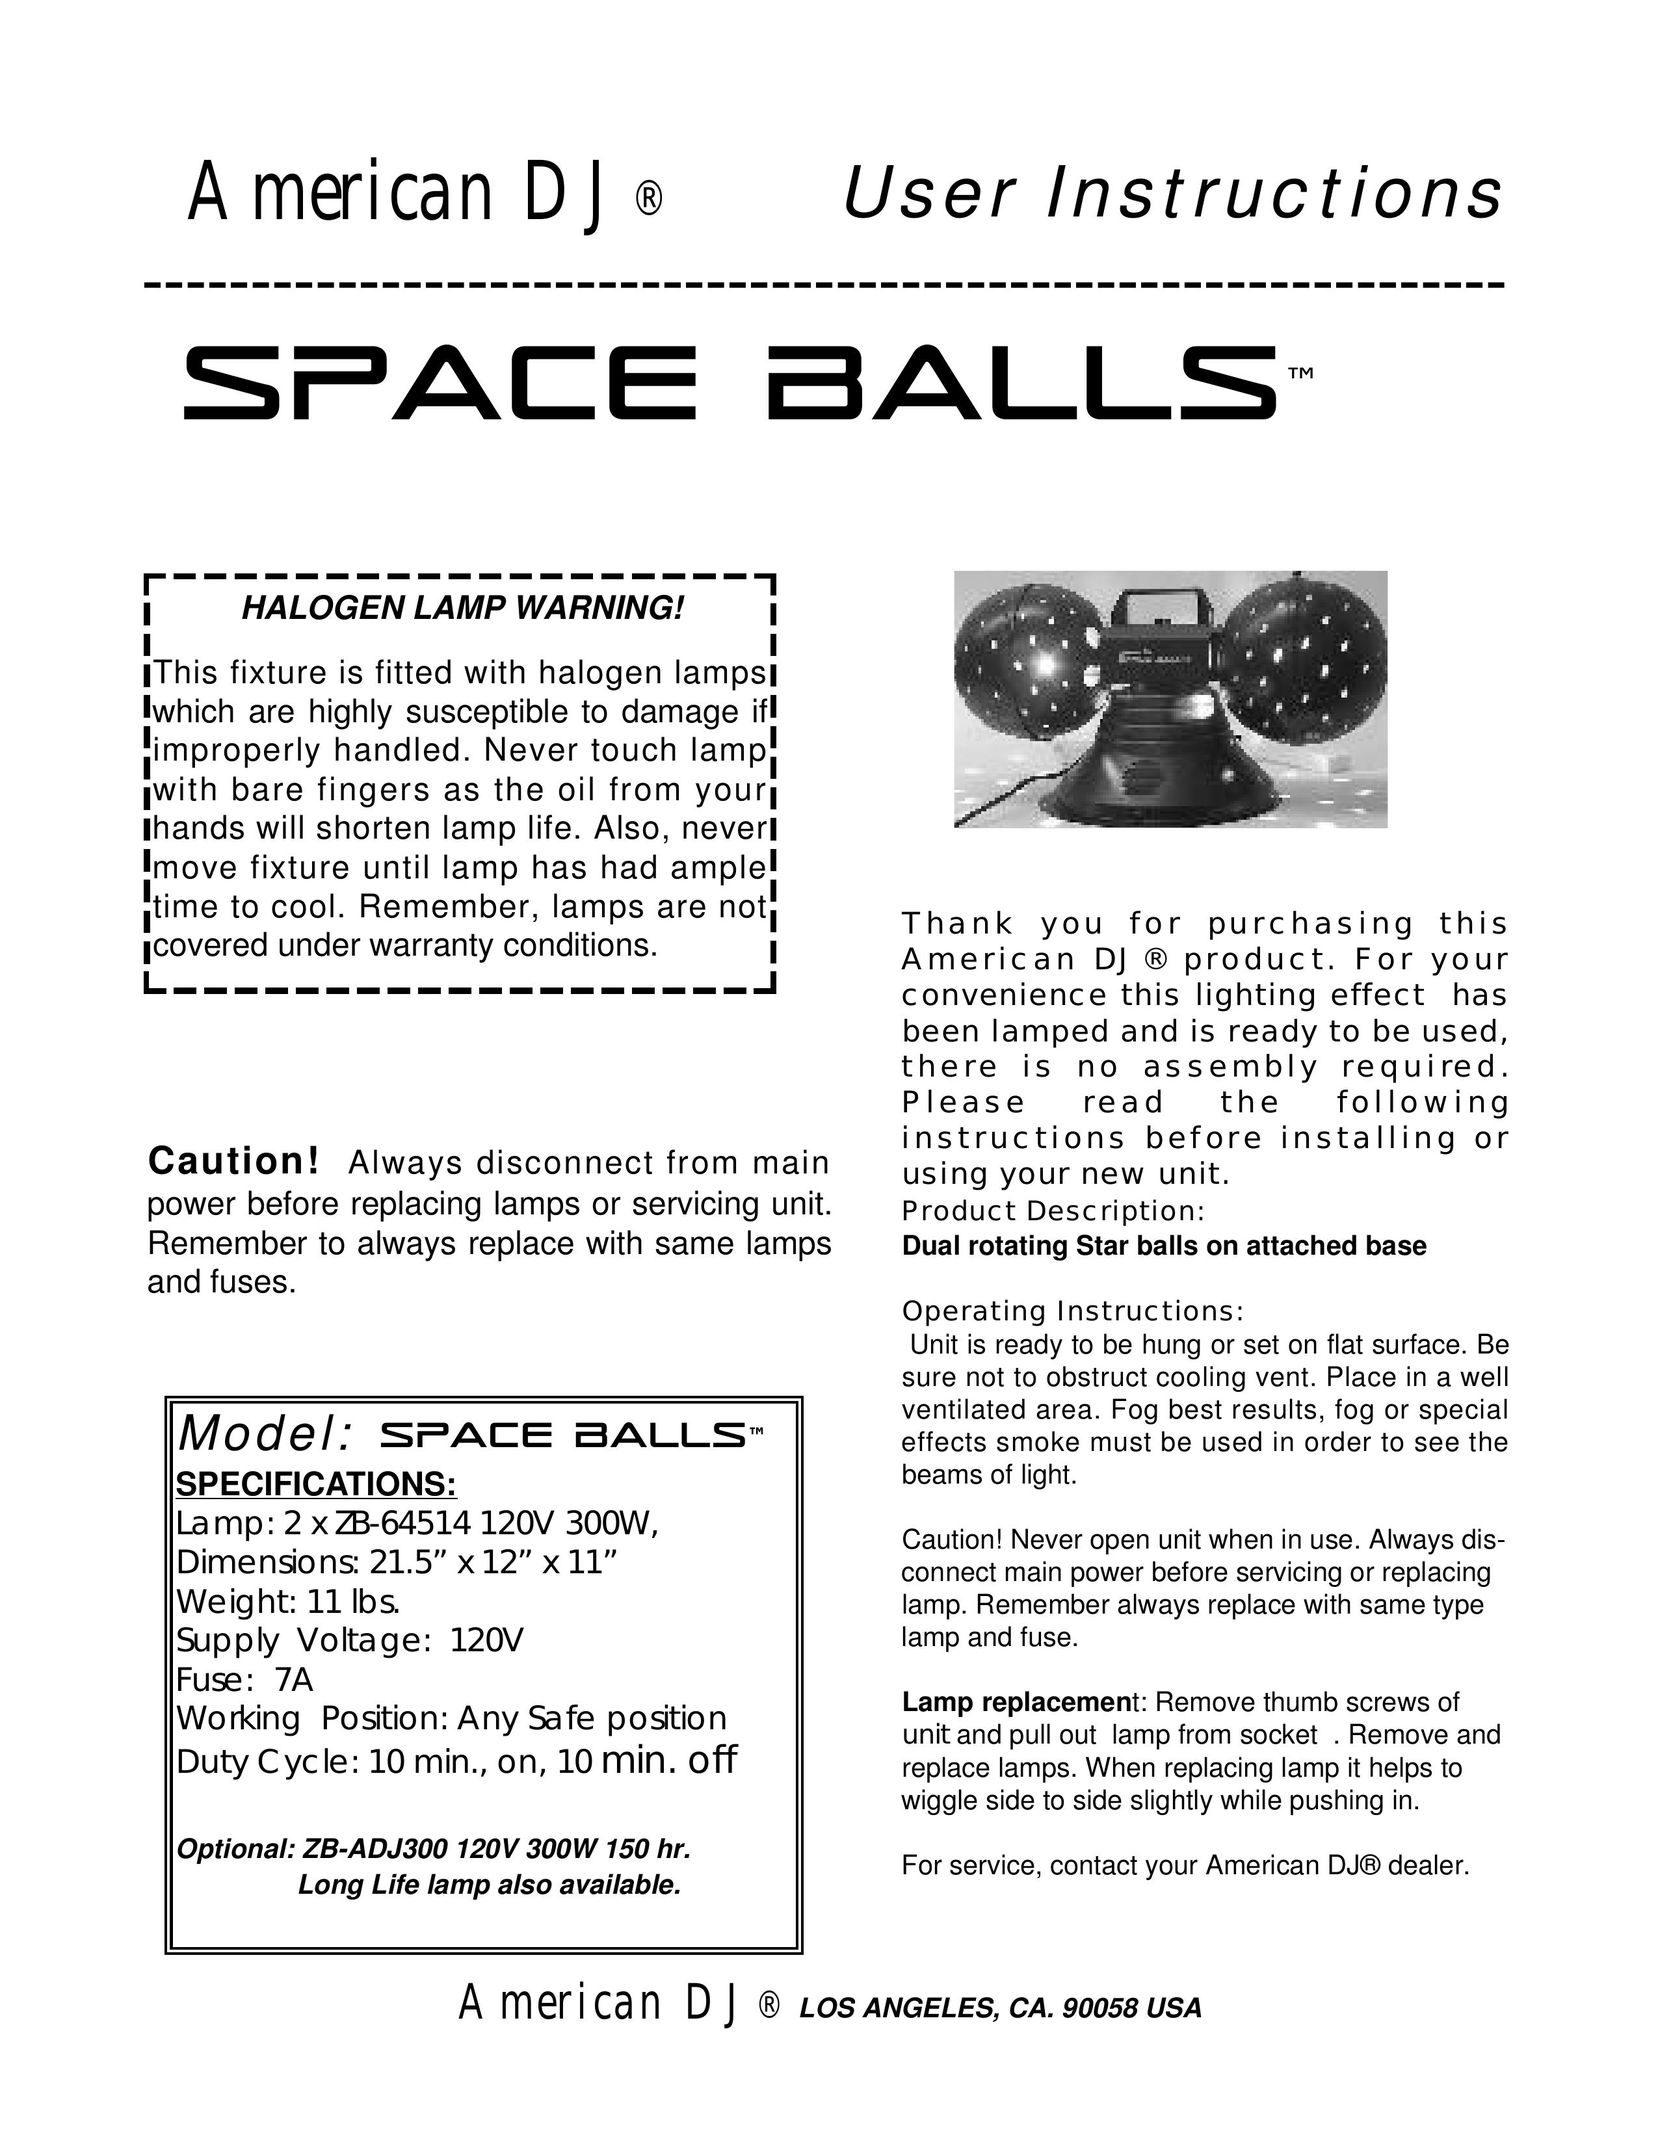 American DJ Space Balls Indoor Furnishings User Manual